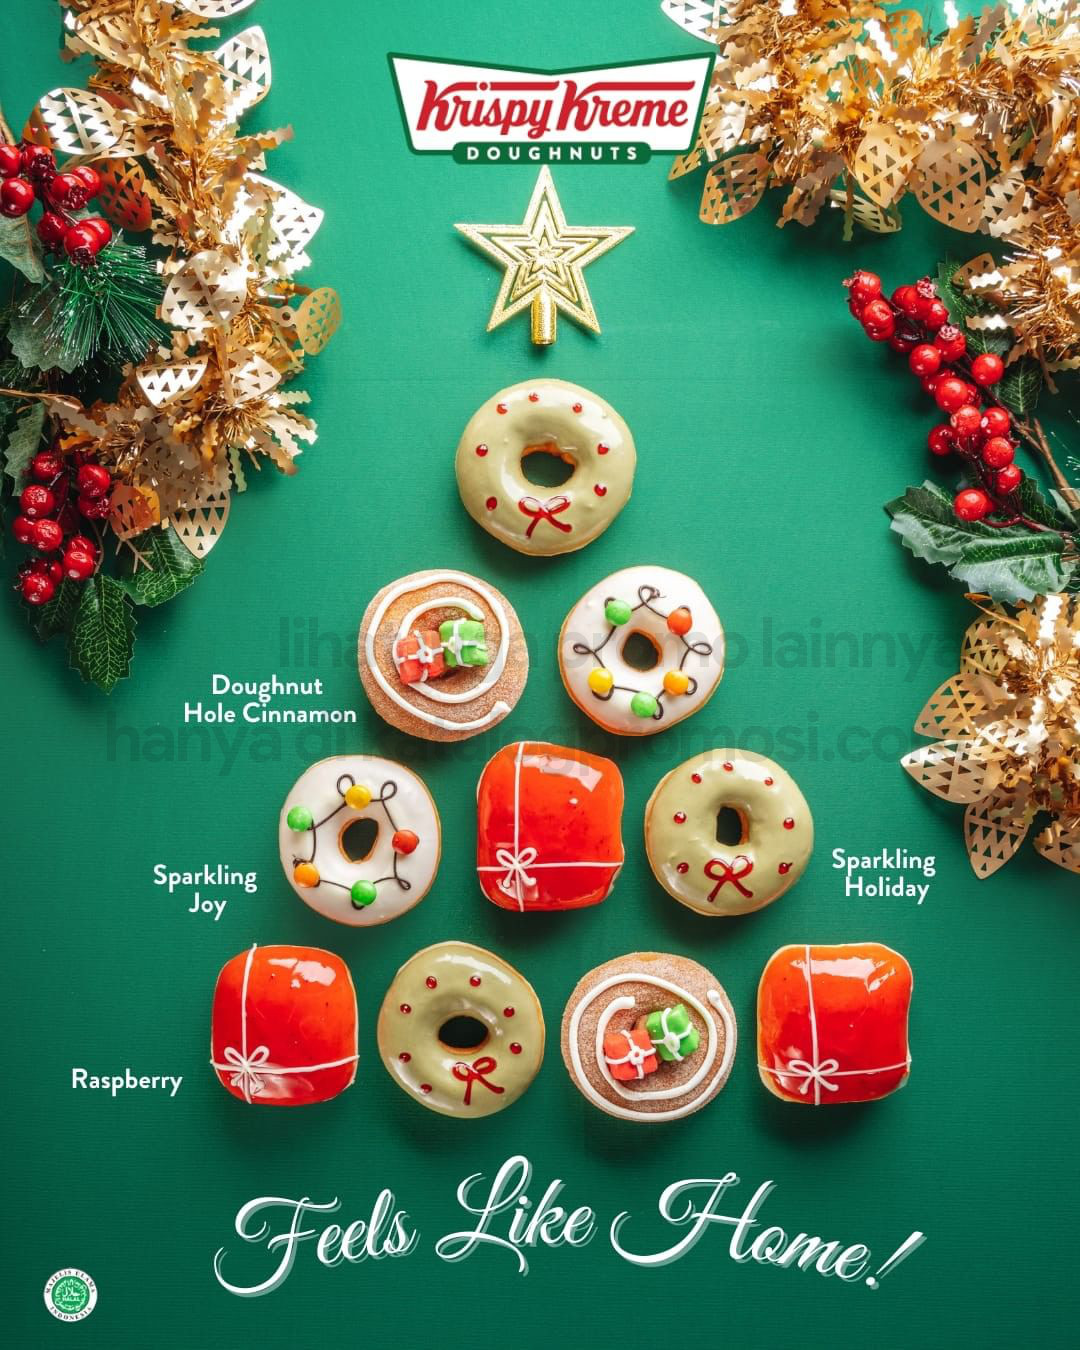 BARU! Krispy Kreme Special Holiday Edition Doughnuts